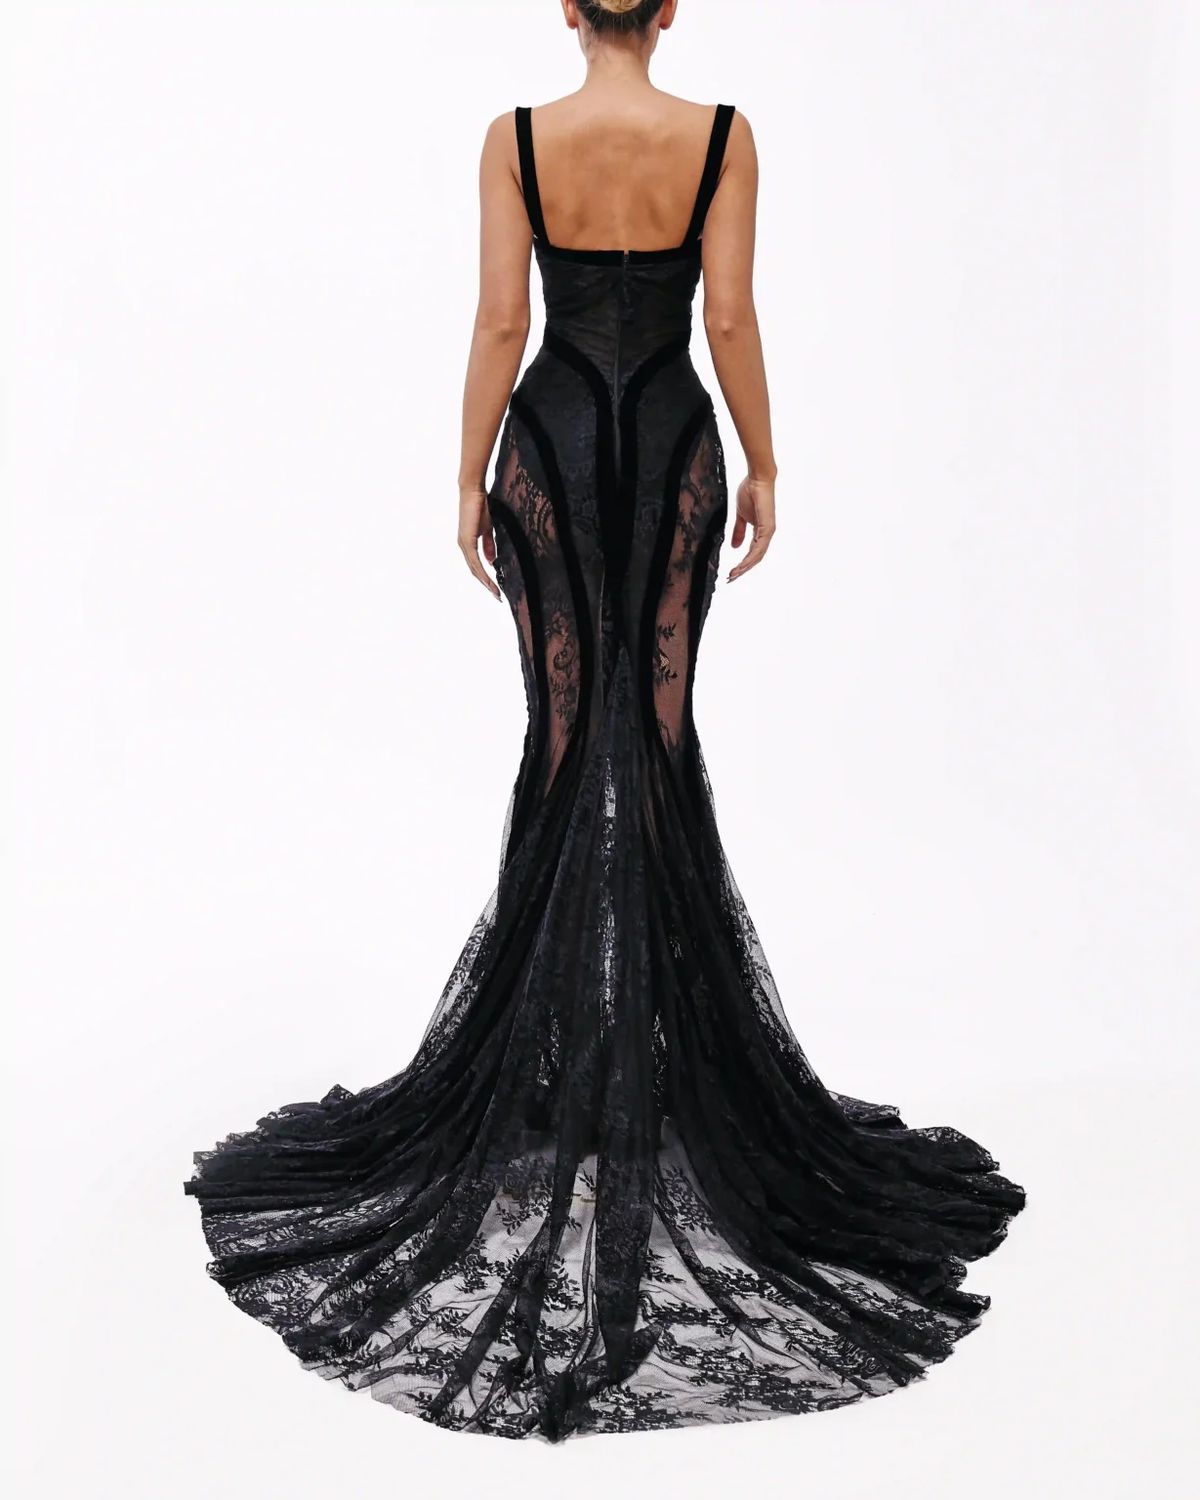 Style euphoria-24-7 Valdrin Sahiti Size S Pageant Black Mermaid Dress on Queenly